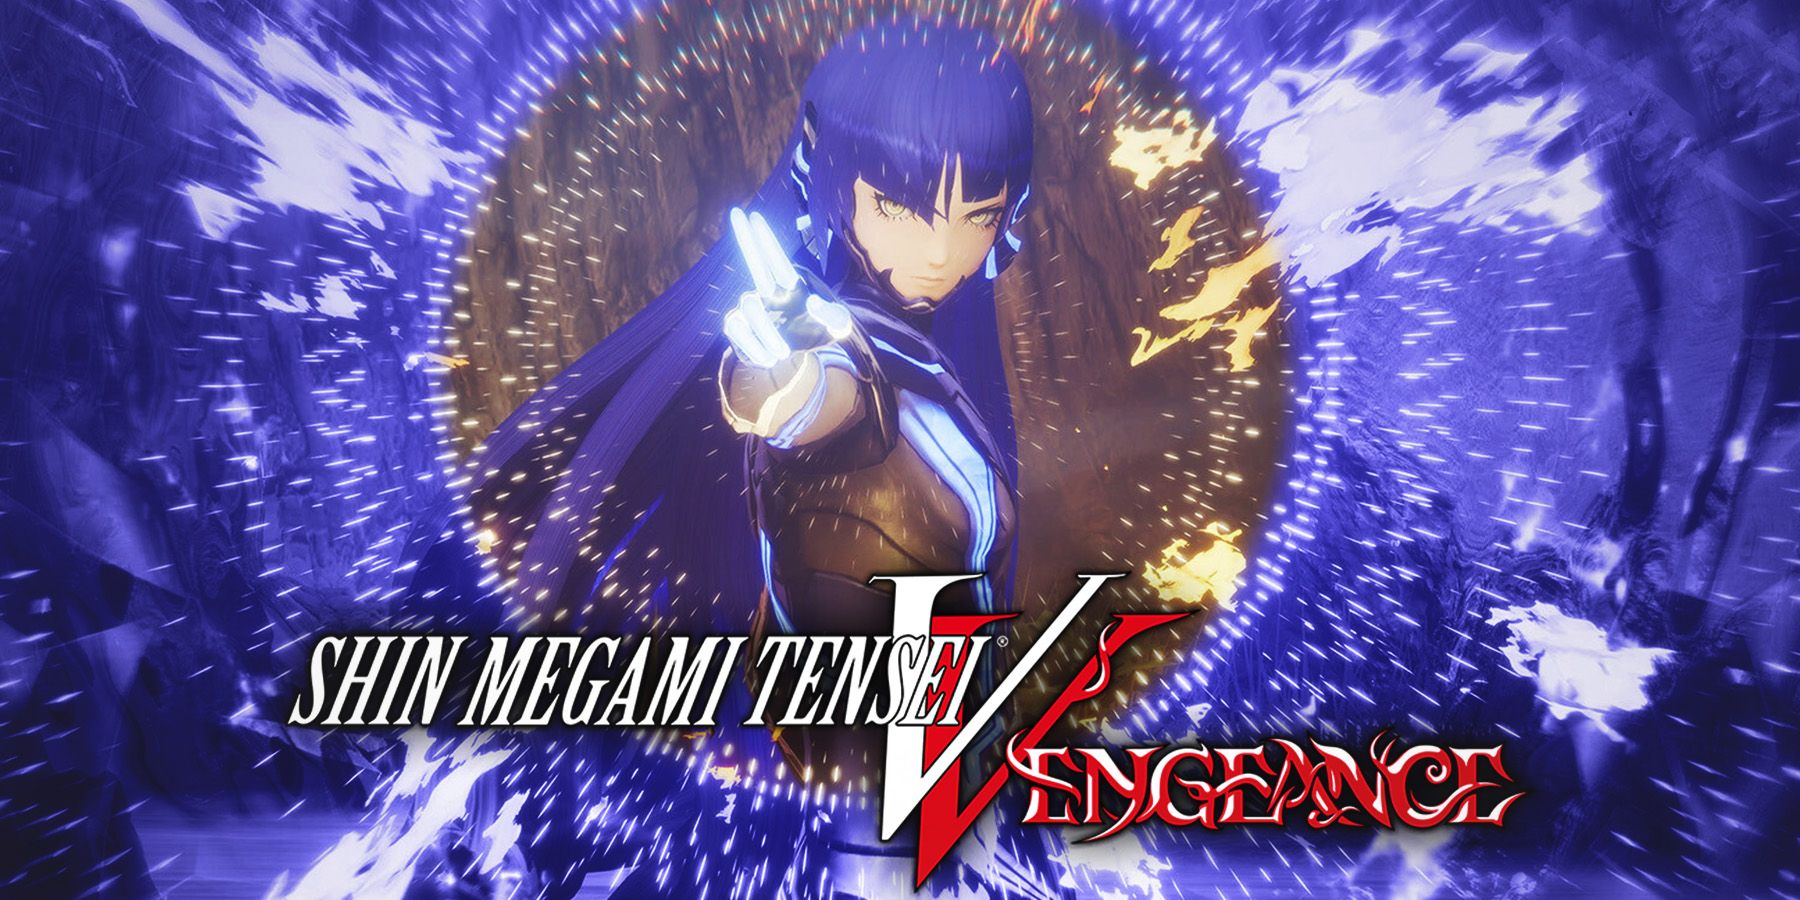 Shin Megami Tensei 5 Vengeance Nahobino casting spell purple tinted edit with SMT5V game logo